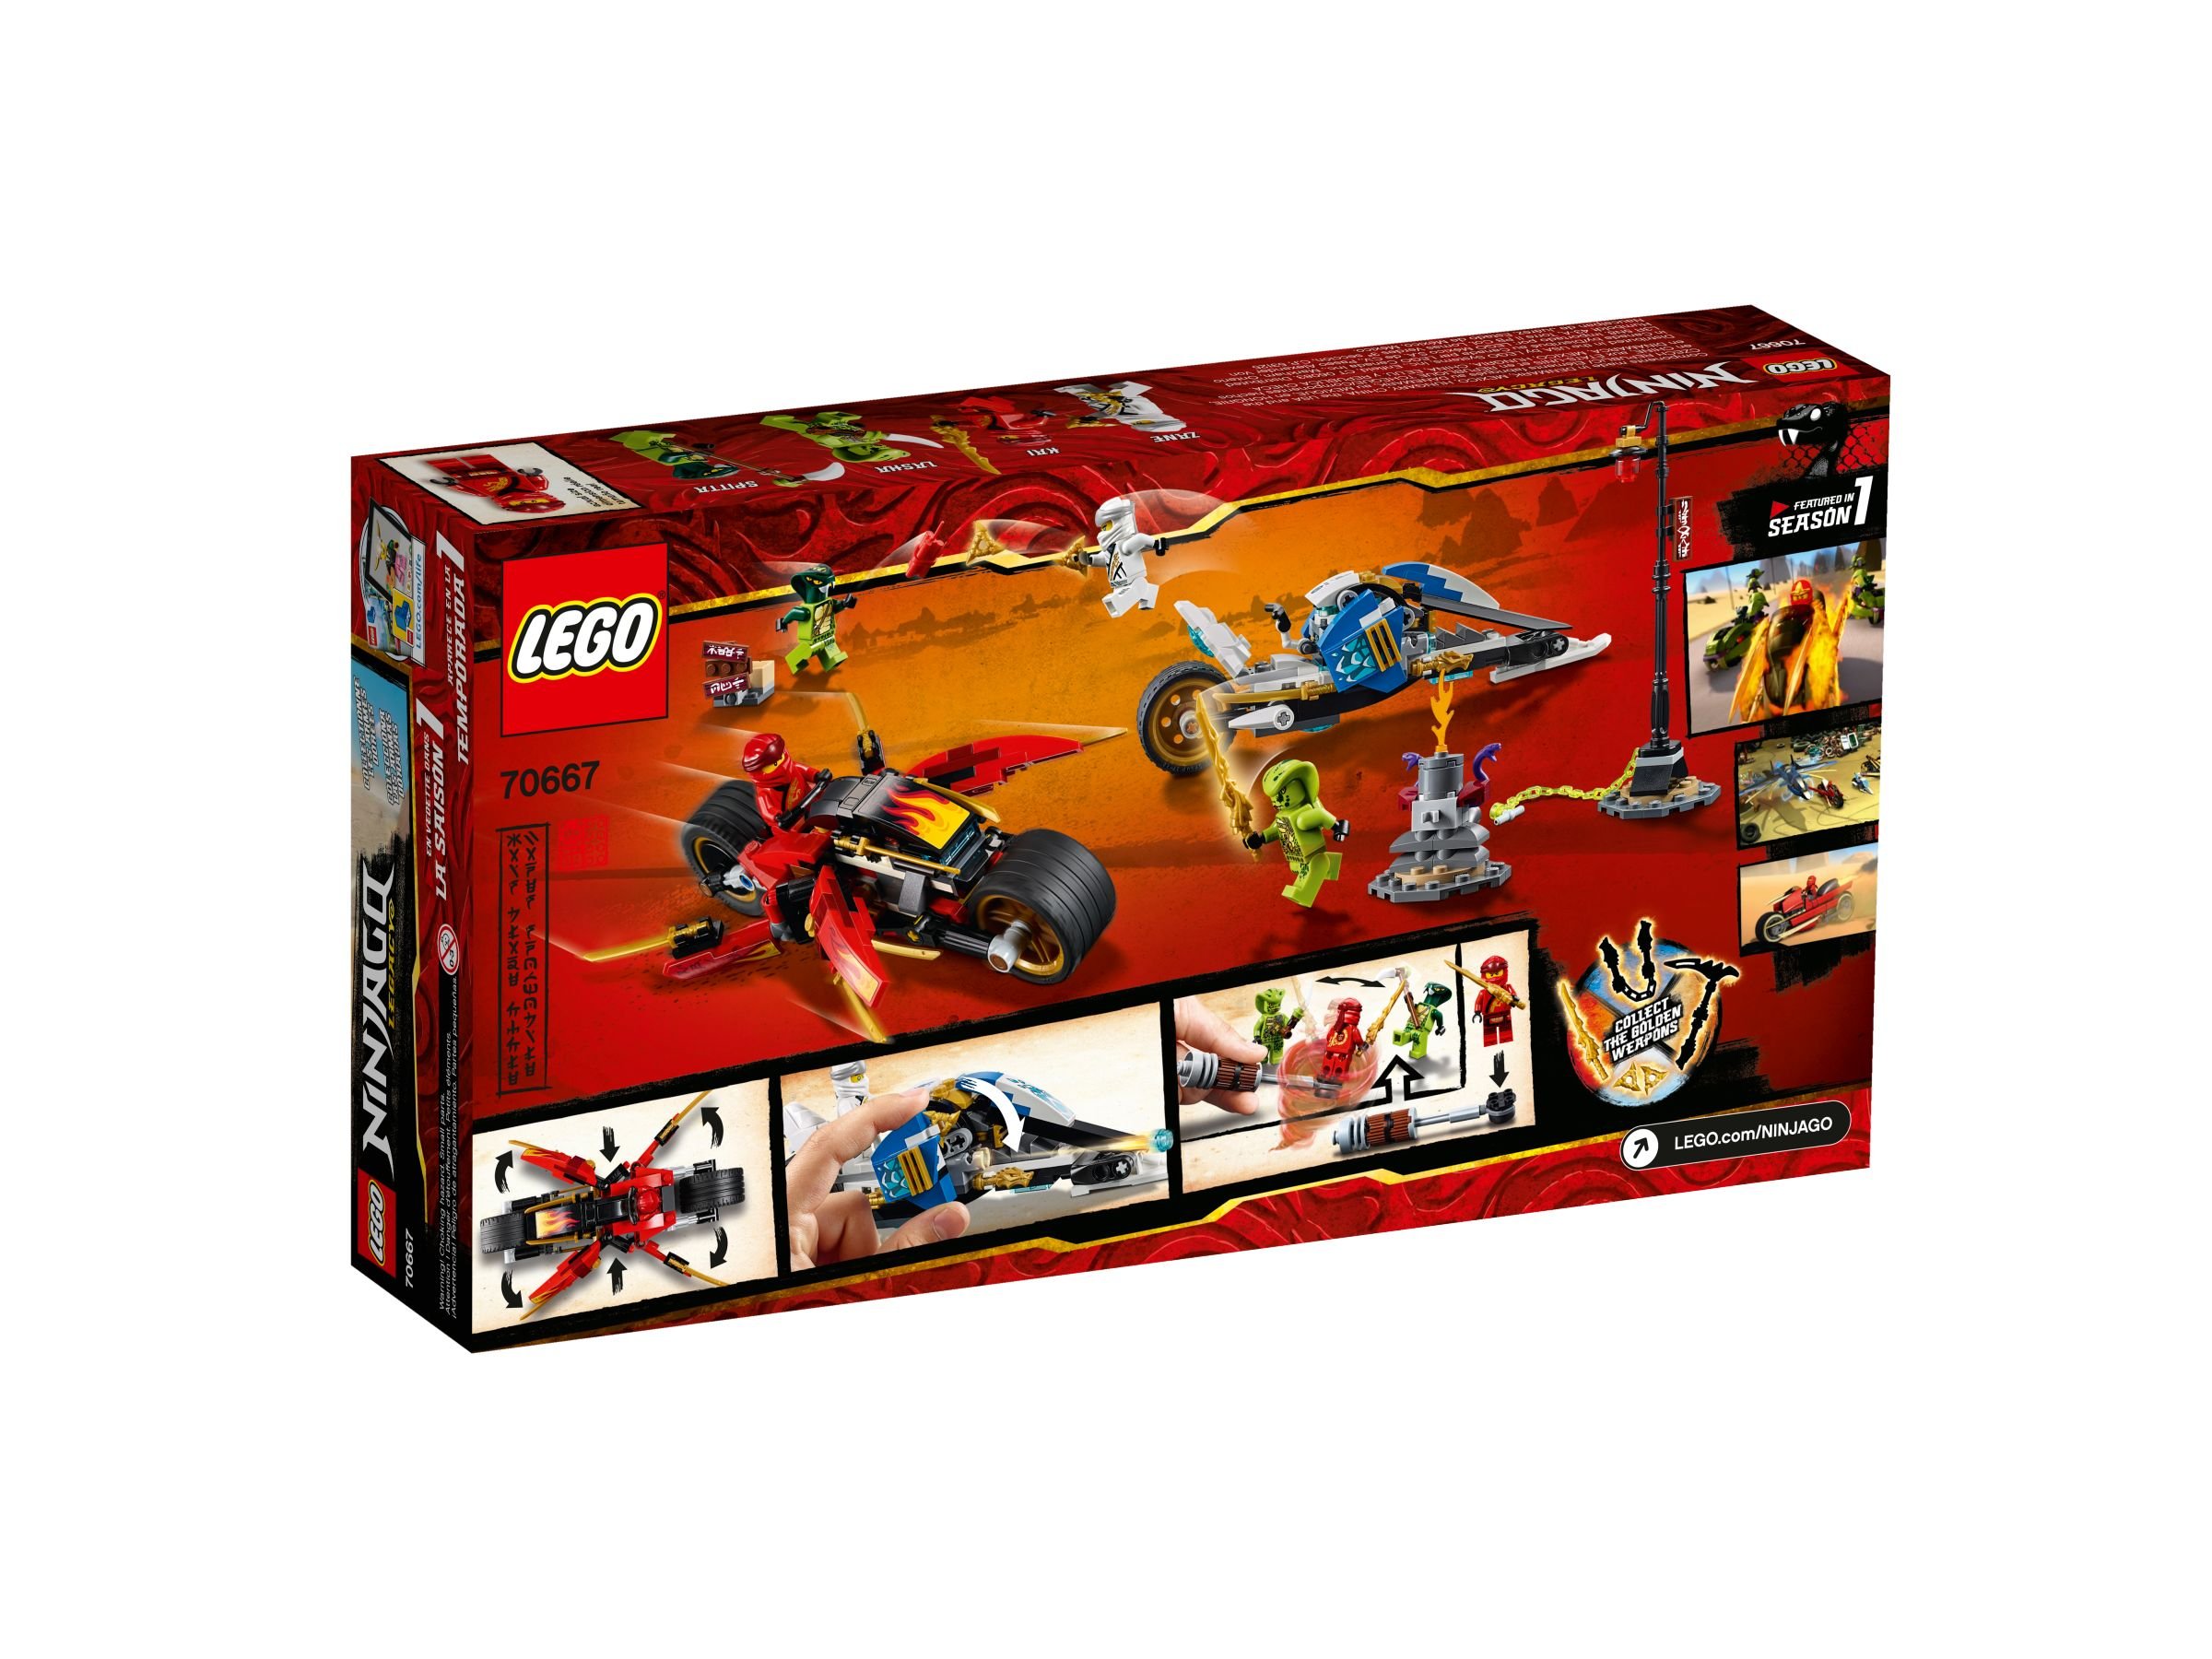 LEGO Ninjago 70667 Kais Feuer-Bike & Zanes Schneemobil LEGO_70667_alt4.jpg